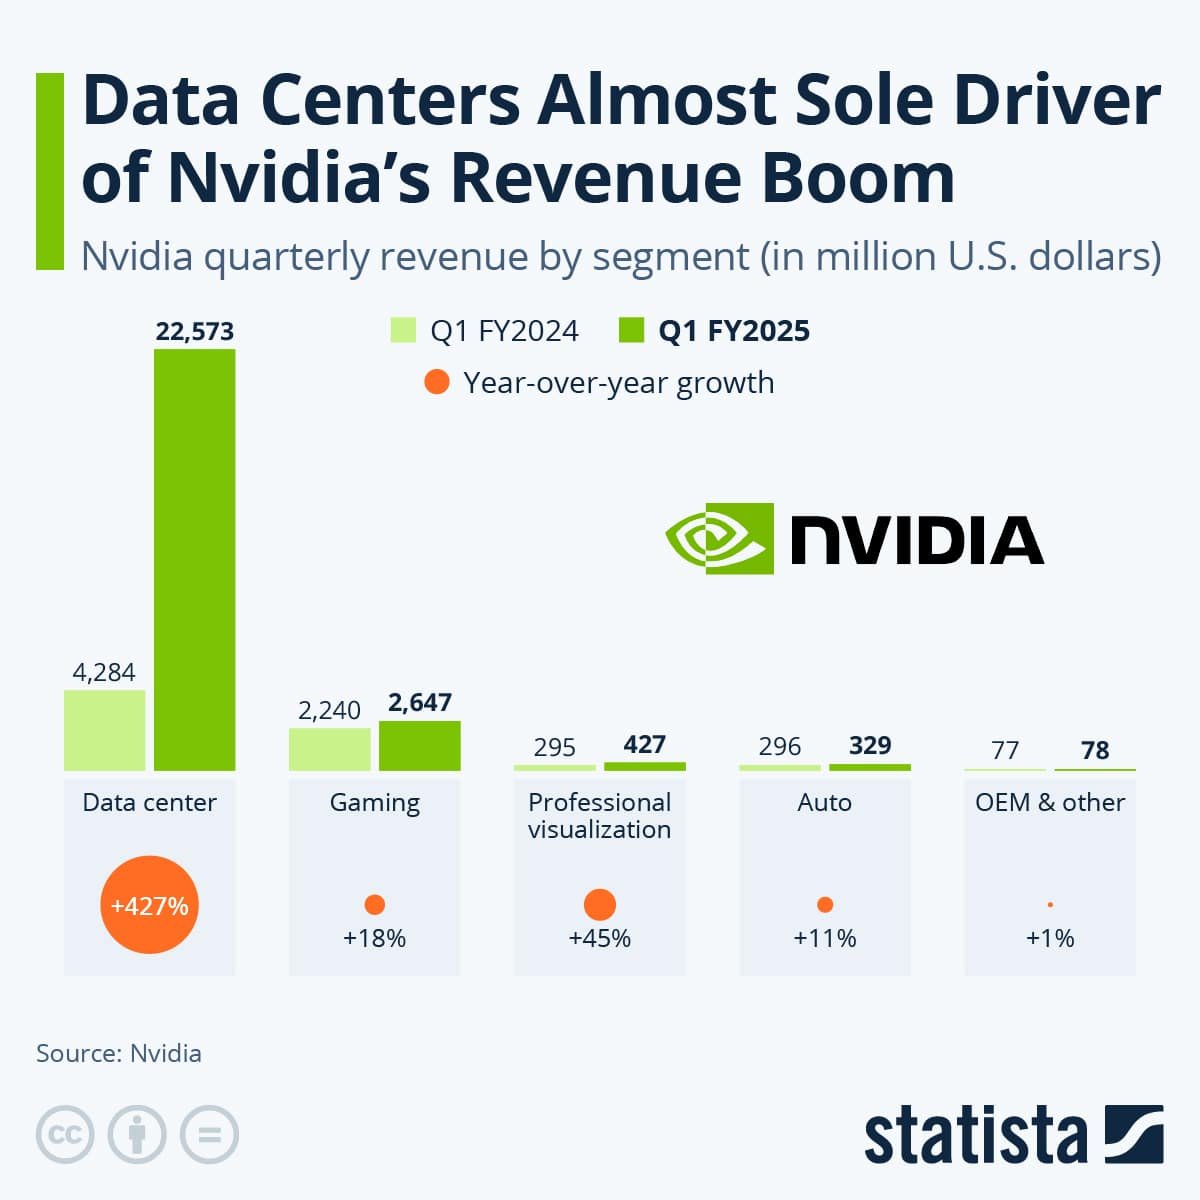 Nvidia revenue segment data center